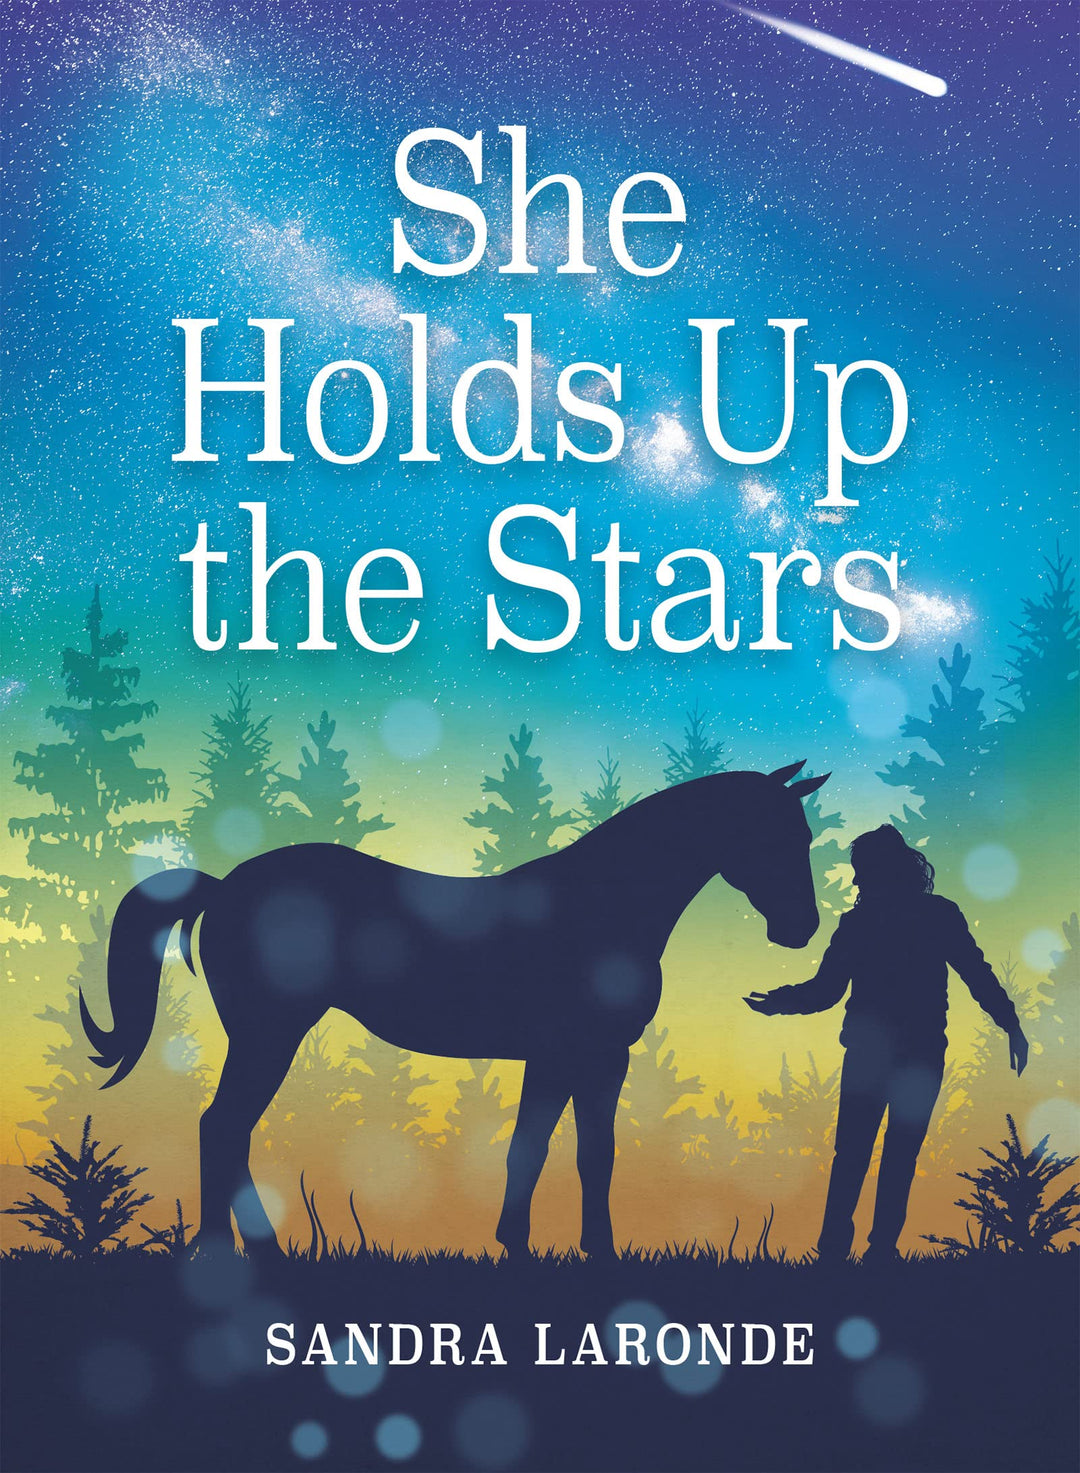 She Holds Up the Stars by Sandra Laronde